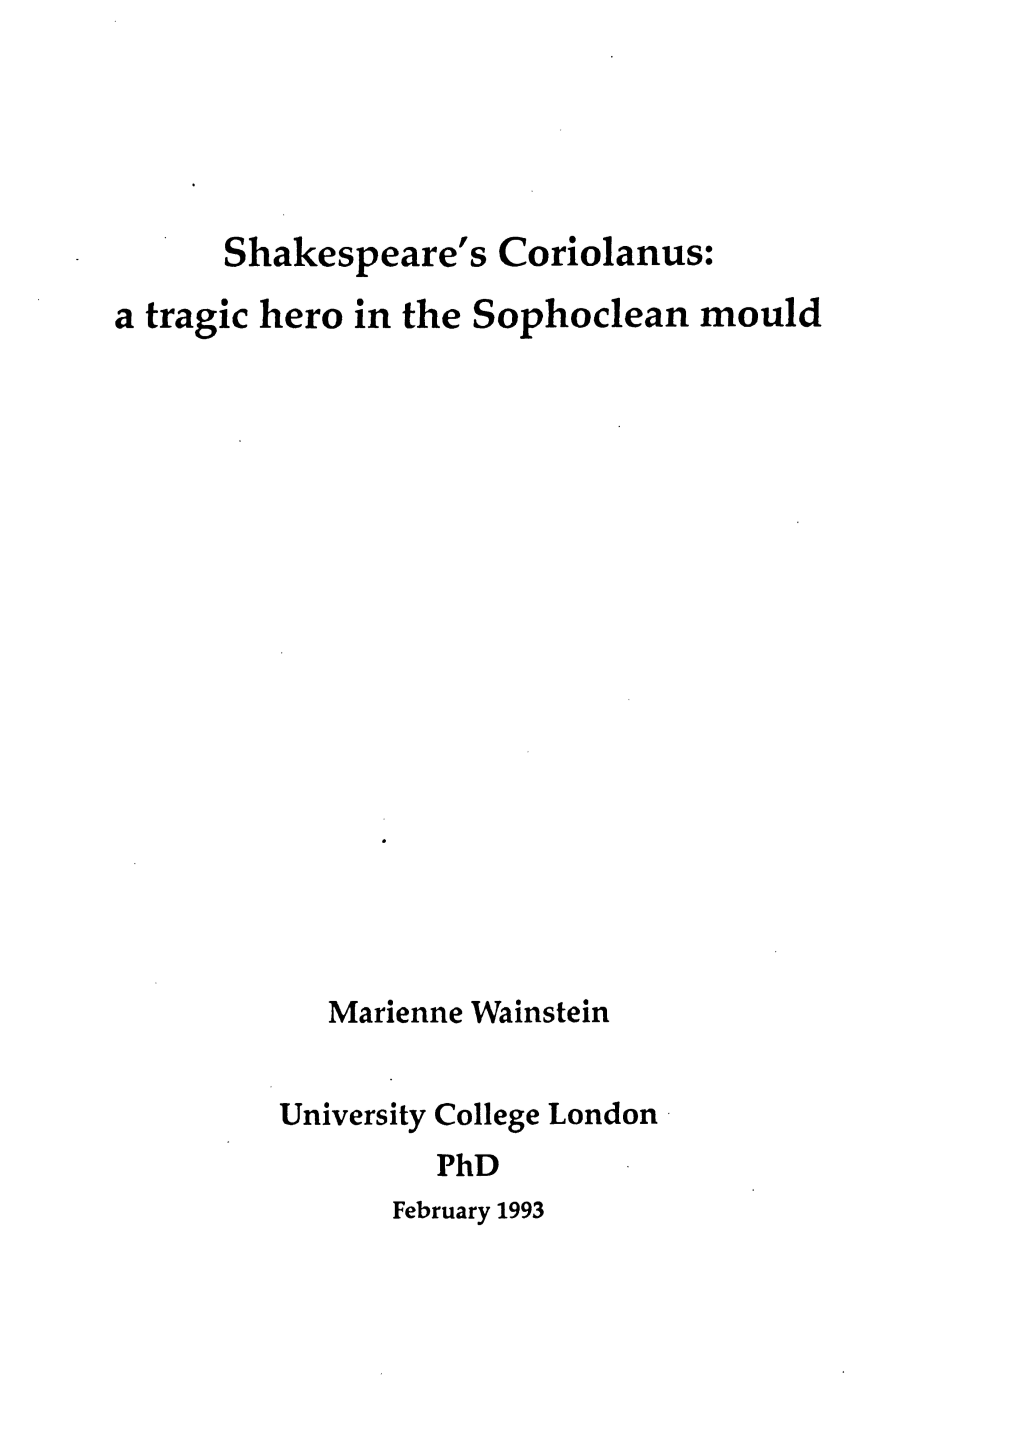 Shakespeare's Coriolanus: a Tragic Hero in the Sophoclean Mould